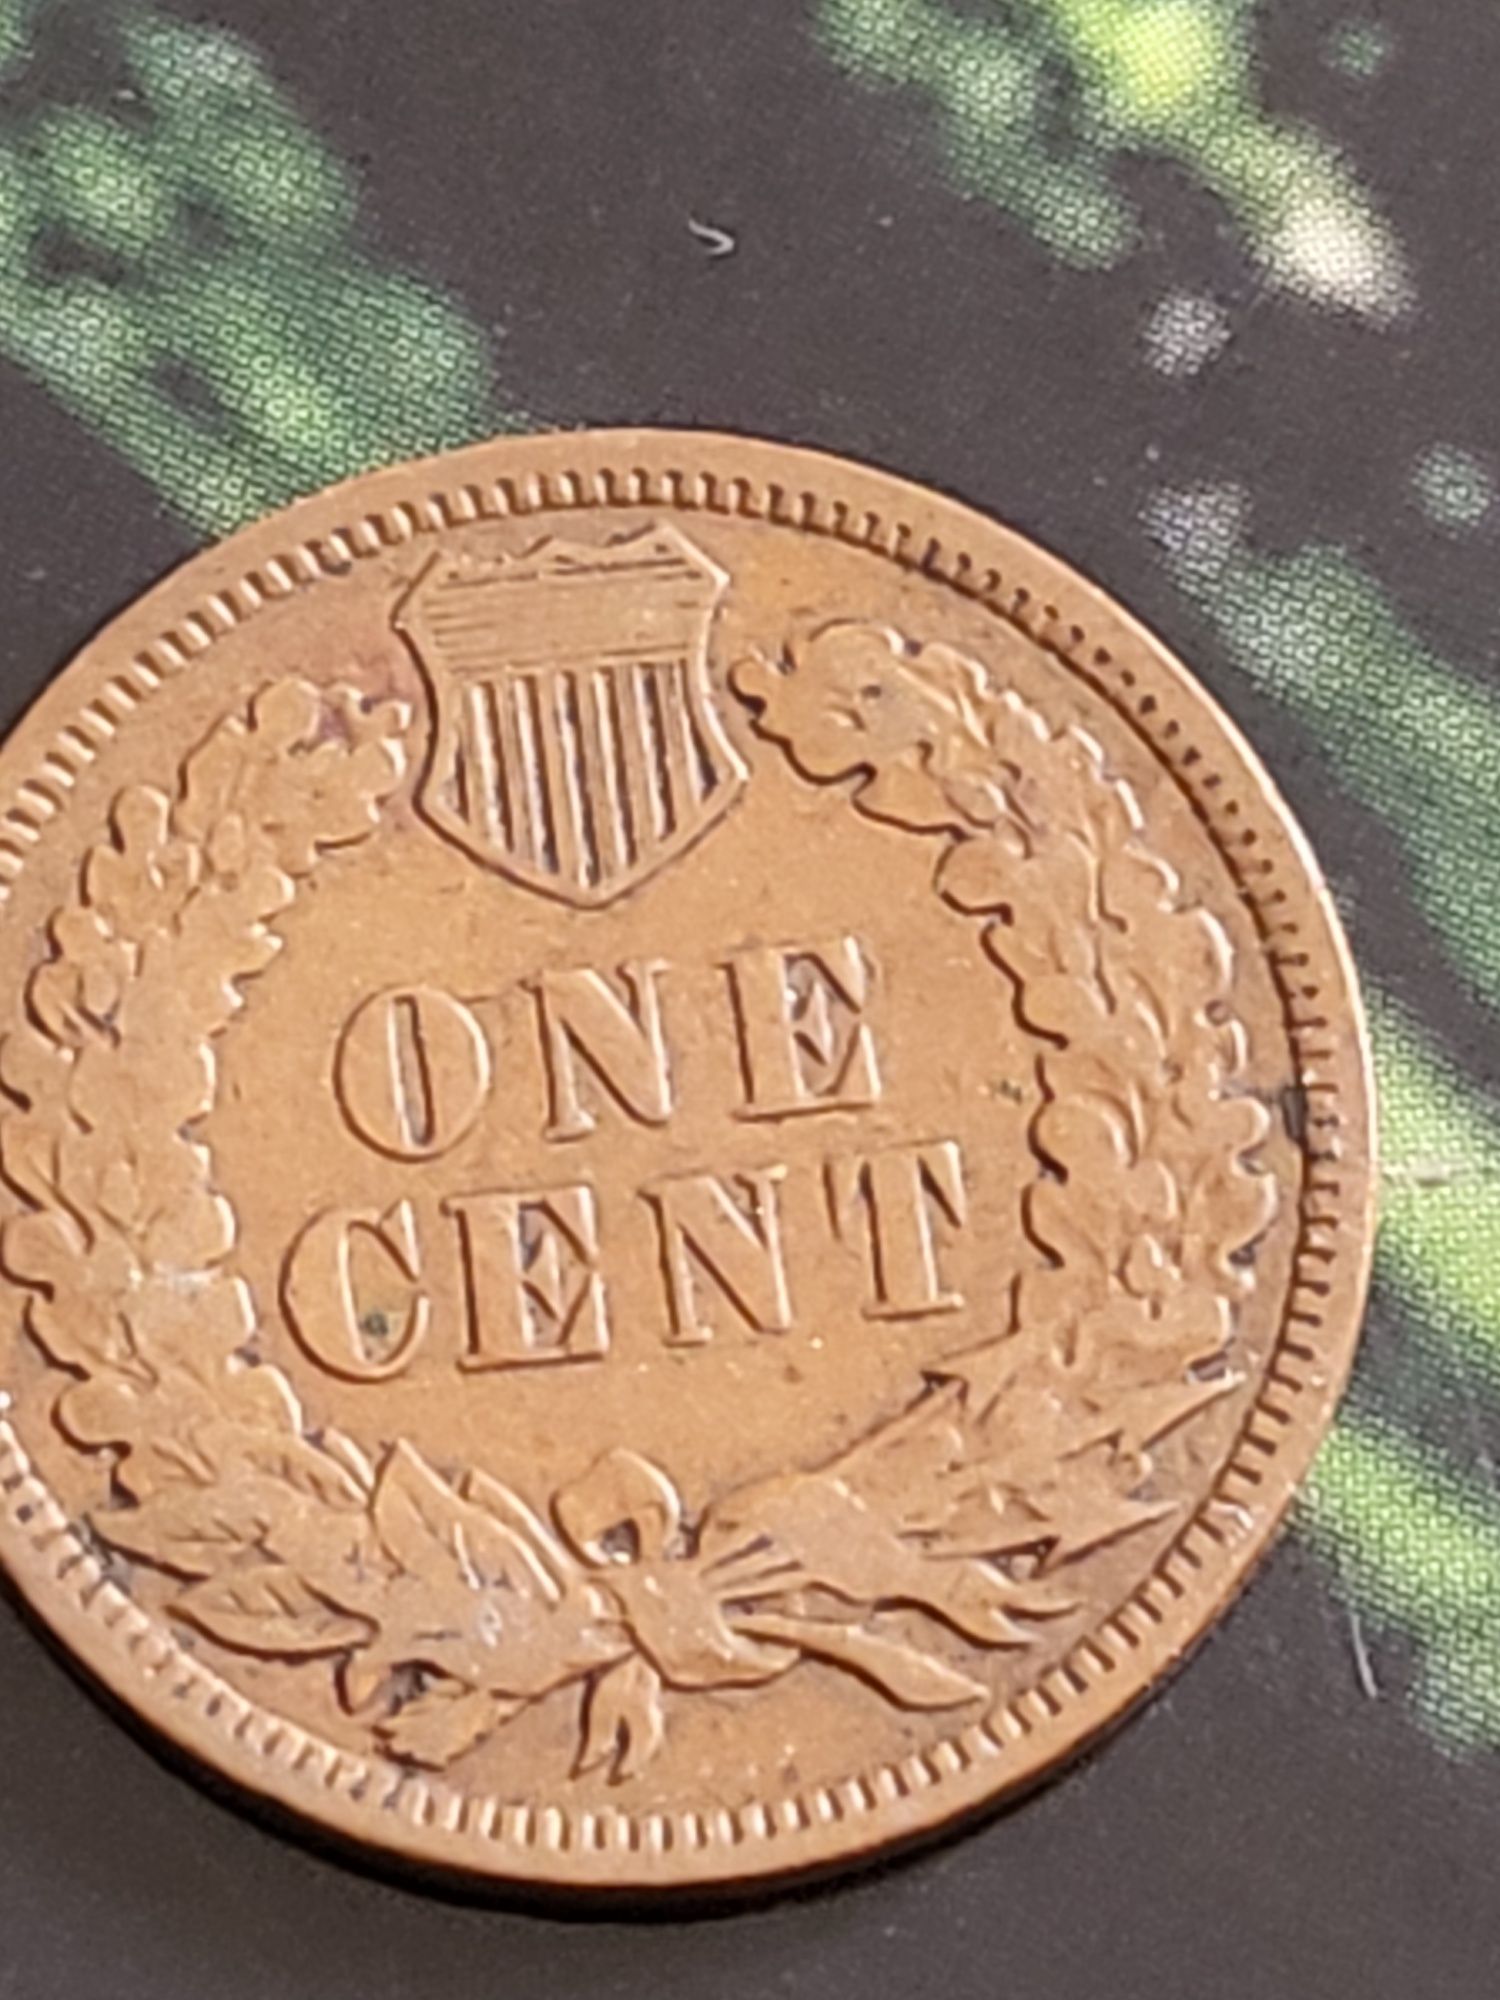 One cent 1907 americana